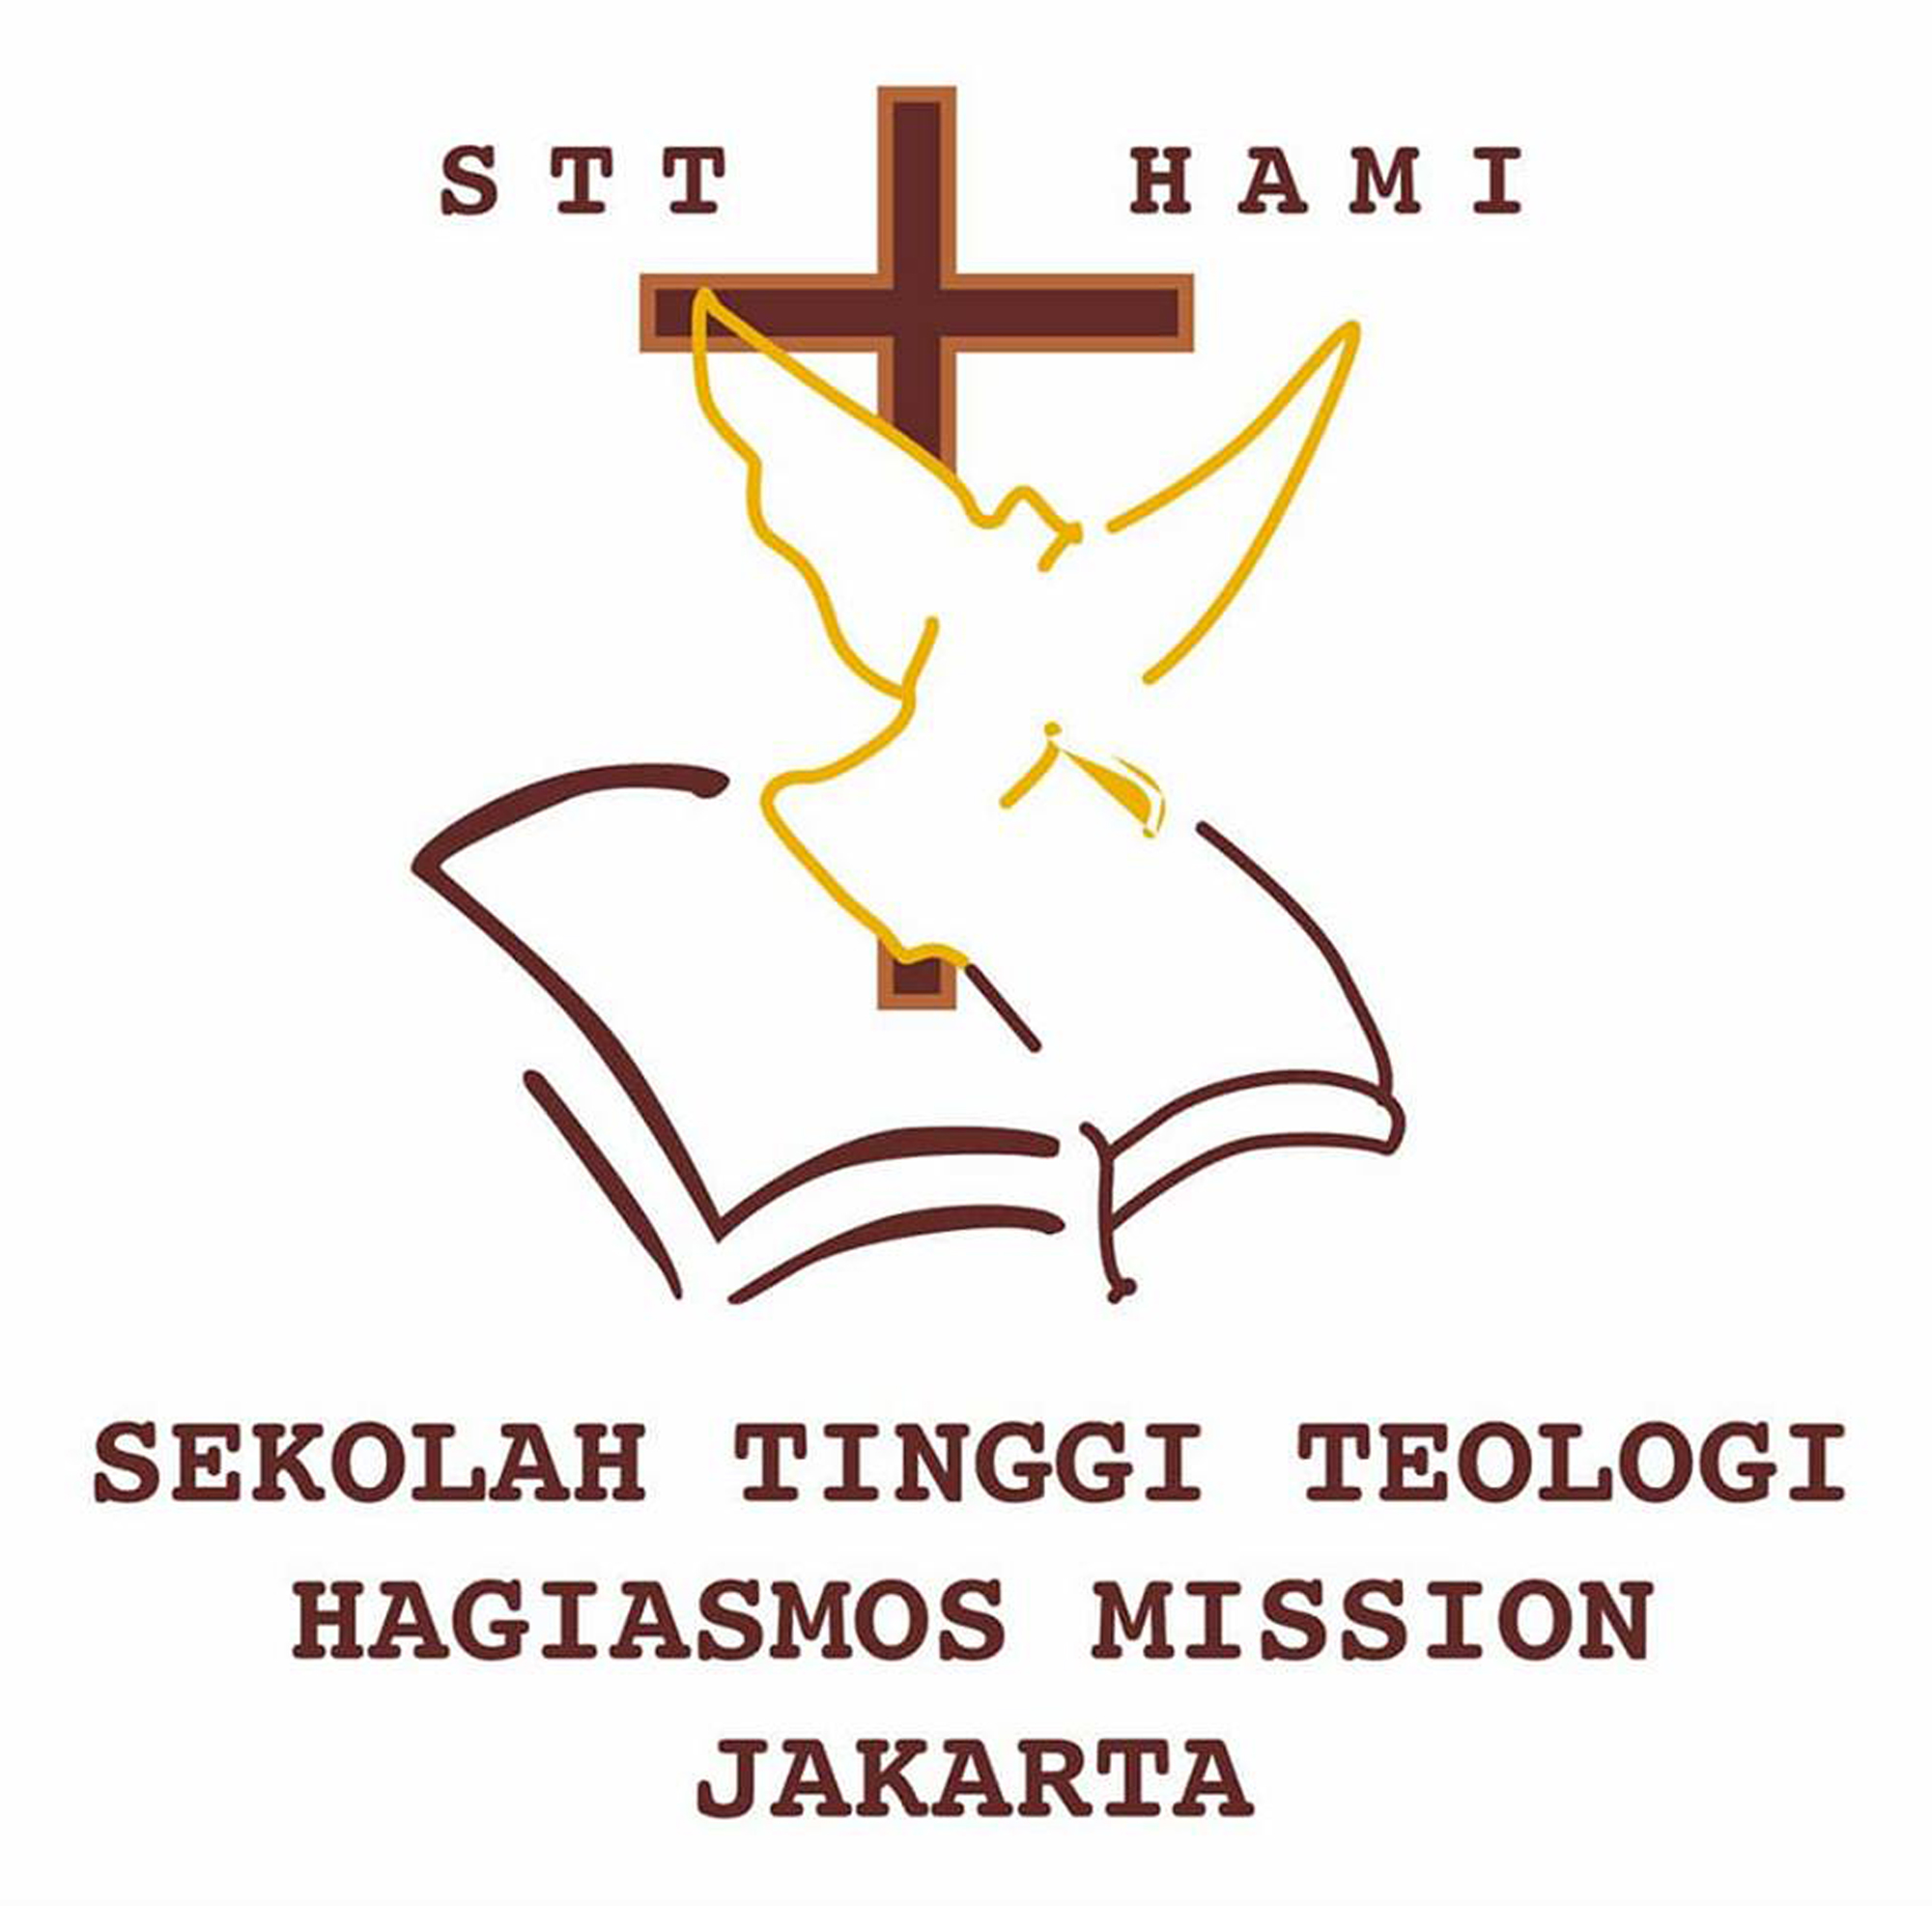 Sekolah Tinggi Teologi Hagiasmos Mission Jakarta